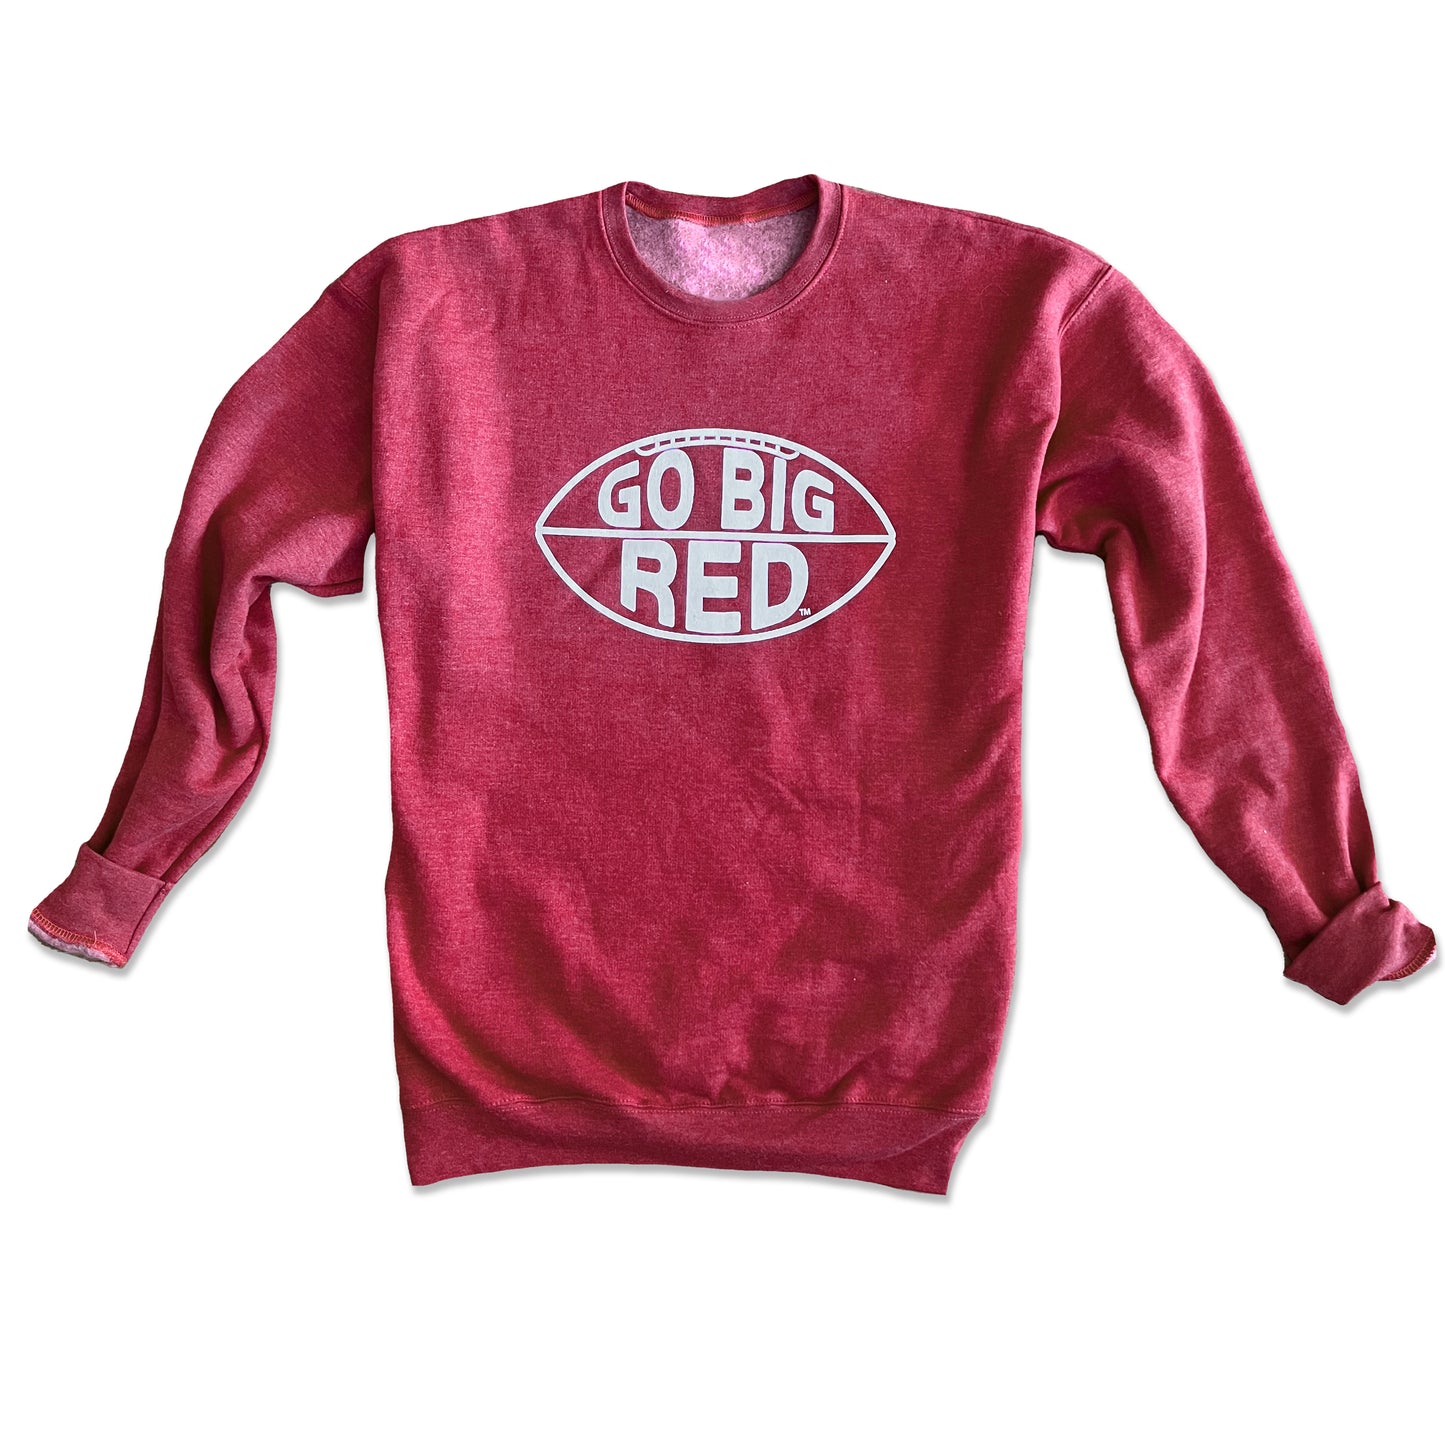 Go Big Red sweatshirt